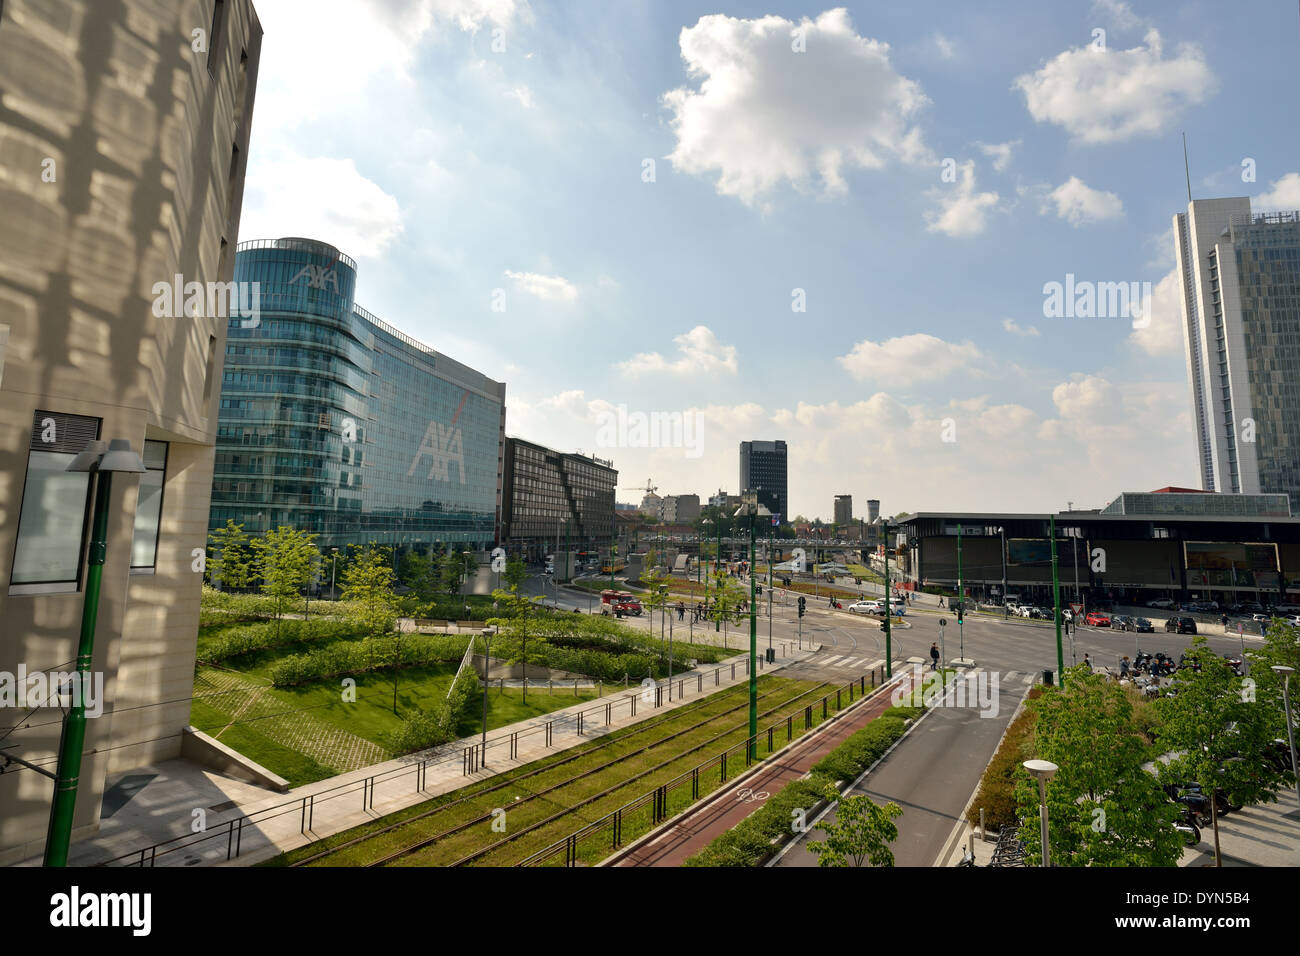 Milan, Porta, Garibaldi Station, view from Vincenzo Capelli street. Stock Photo